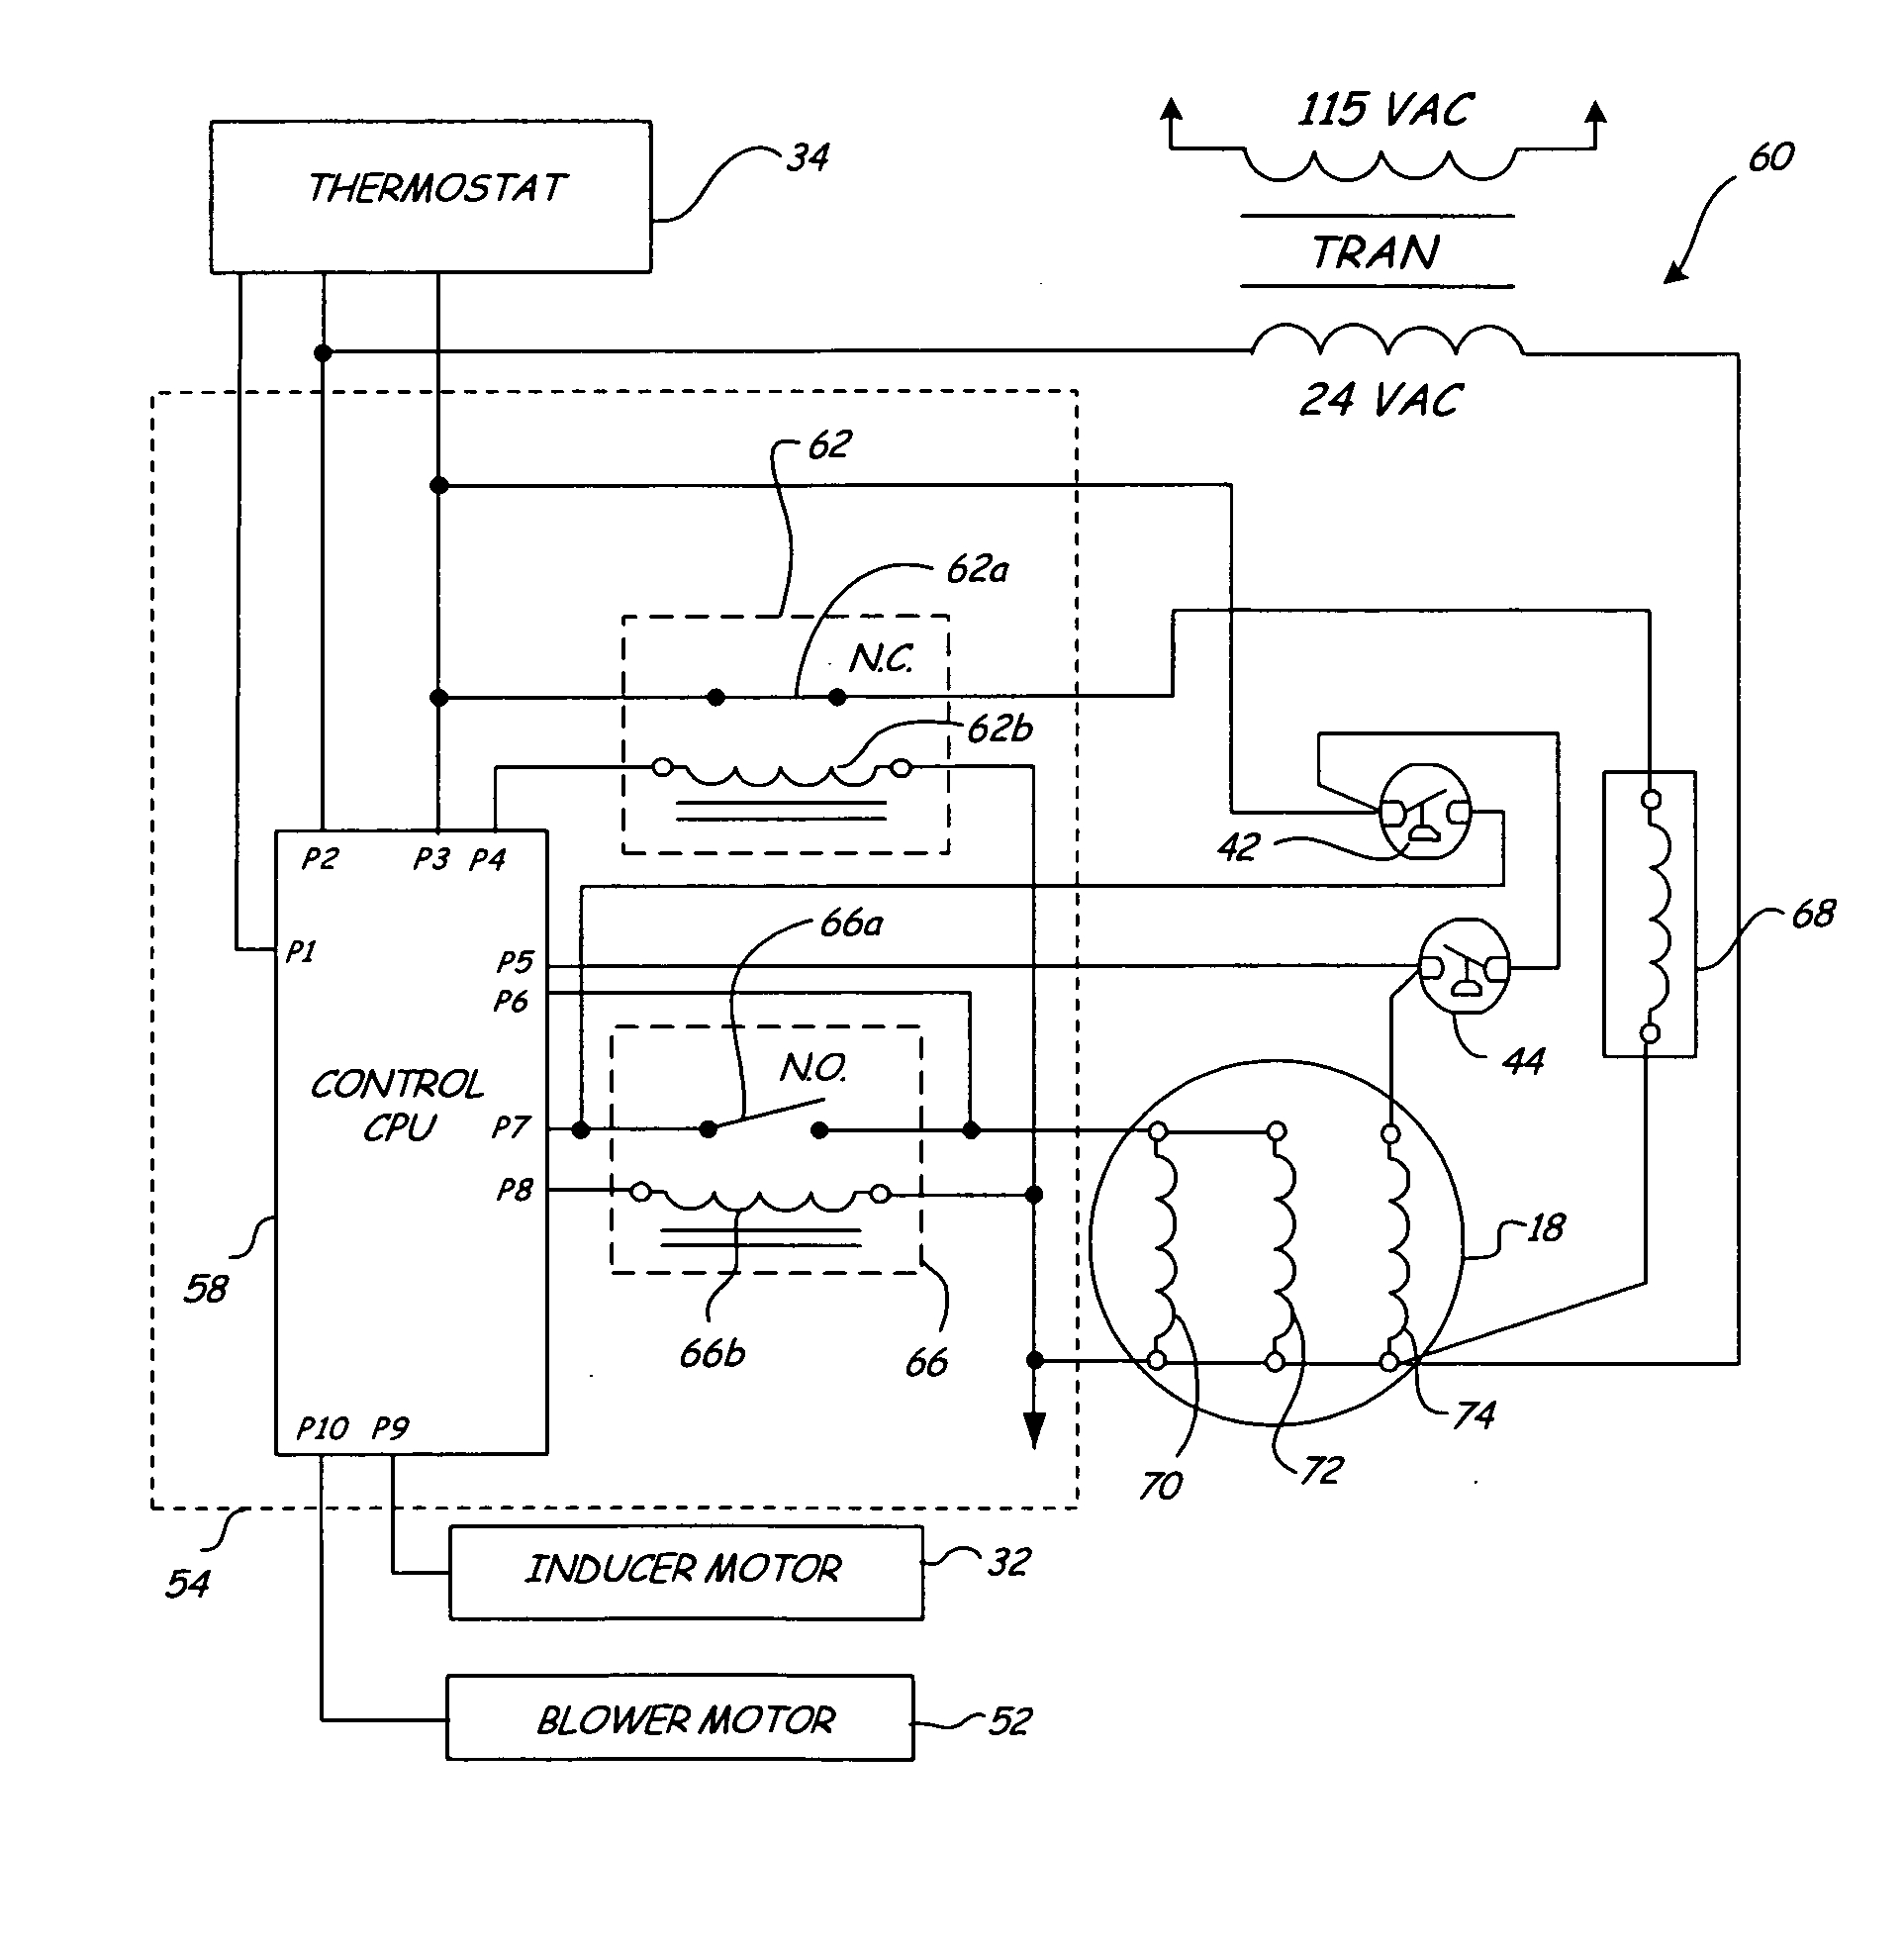 Modine Heater Wiring Schematic | Manual E-Books - Modine Gas Heater Wiring Diagram